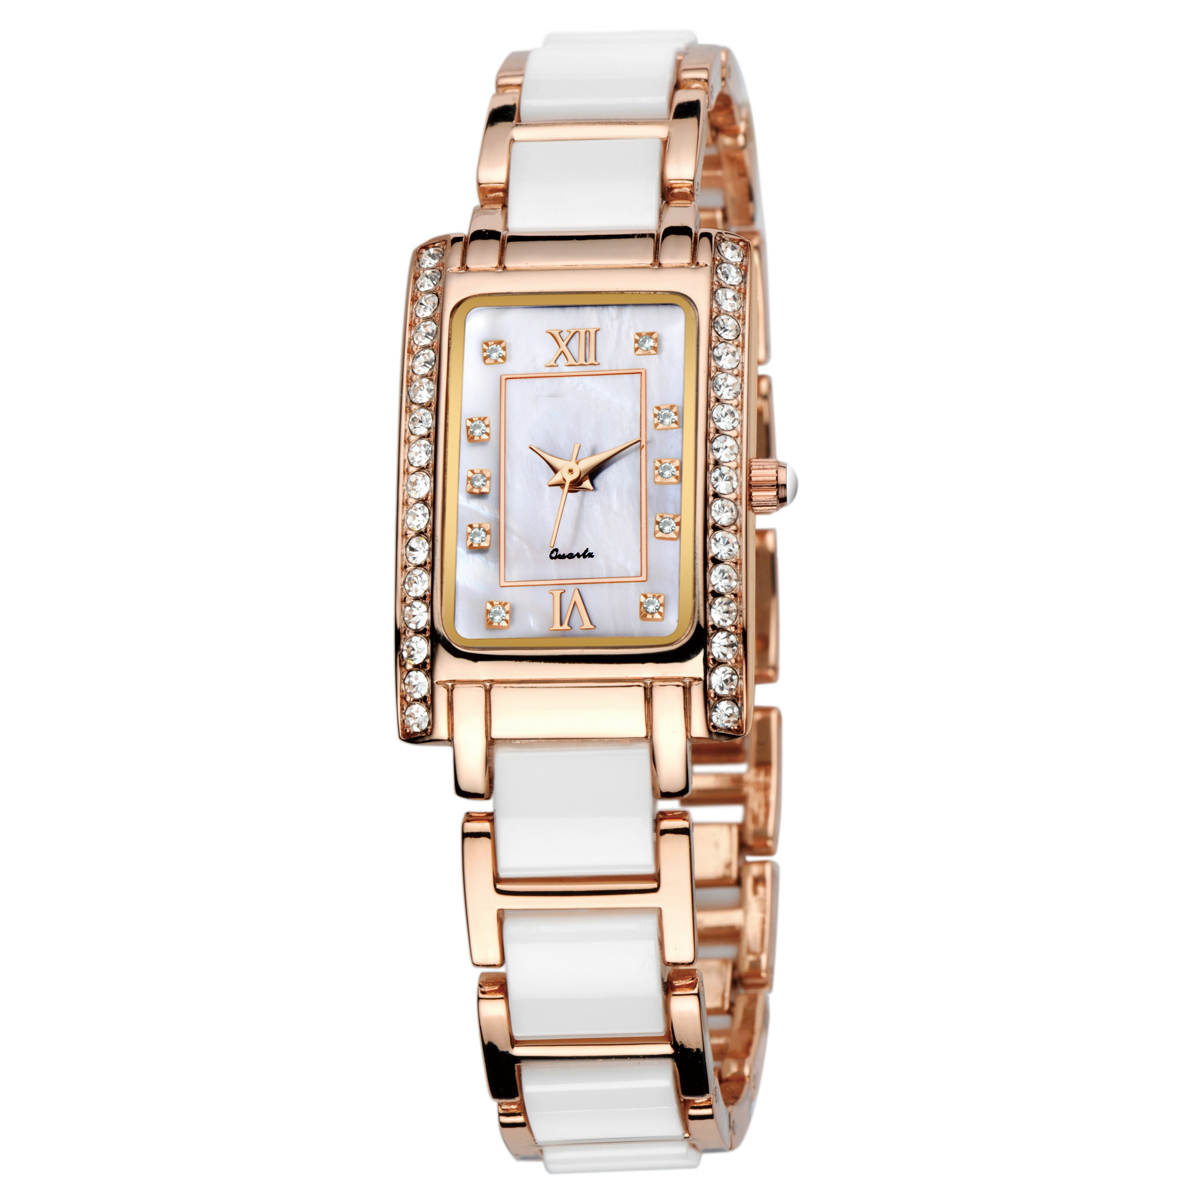 #2510  Voeons Women's Watches Japan Quartz Movement Analog Lady Fashion Luxury Bracelet Watch  - white gold